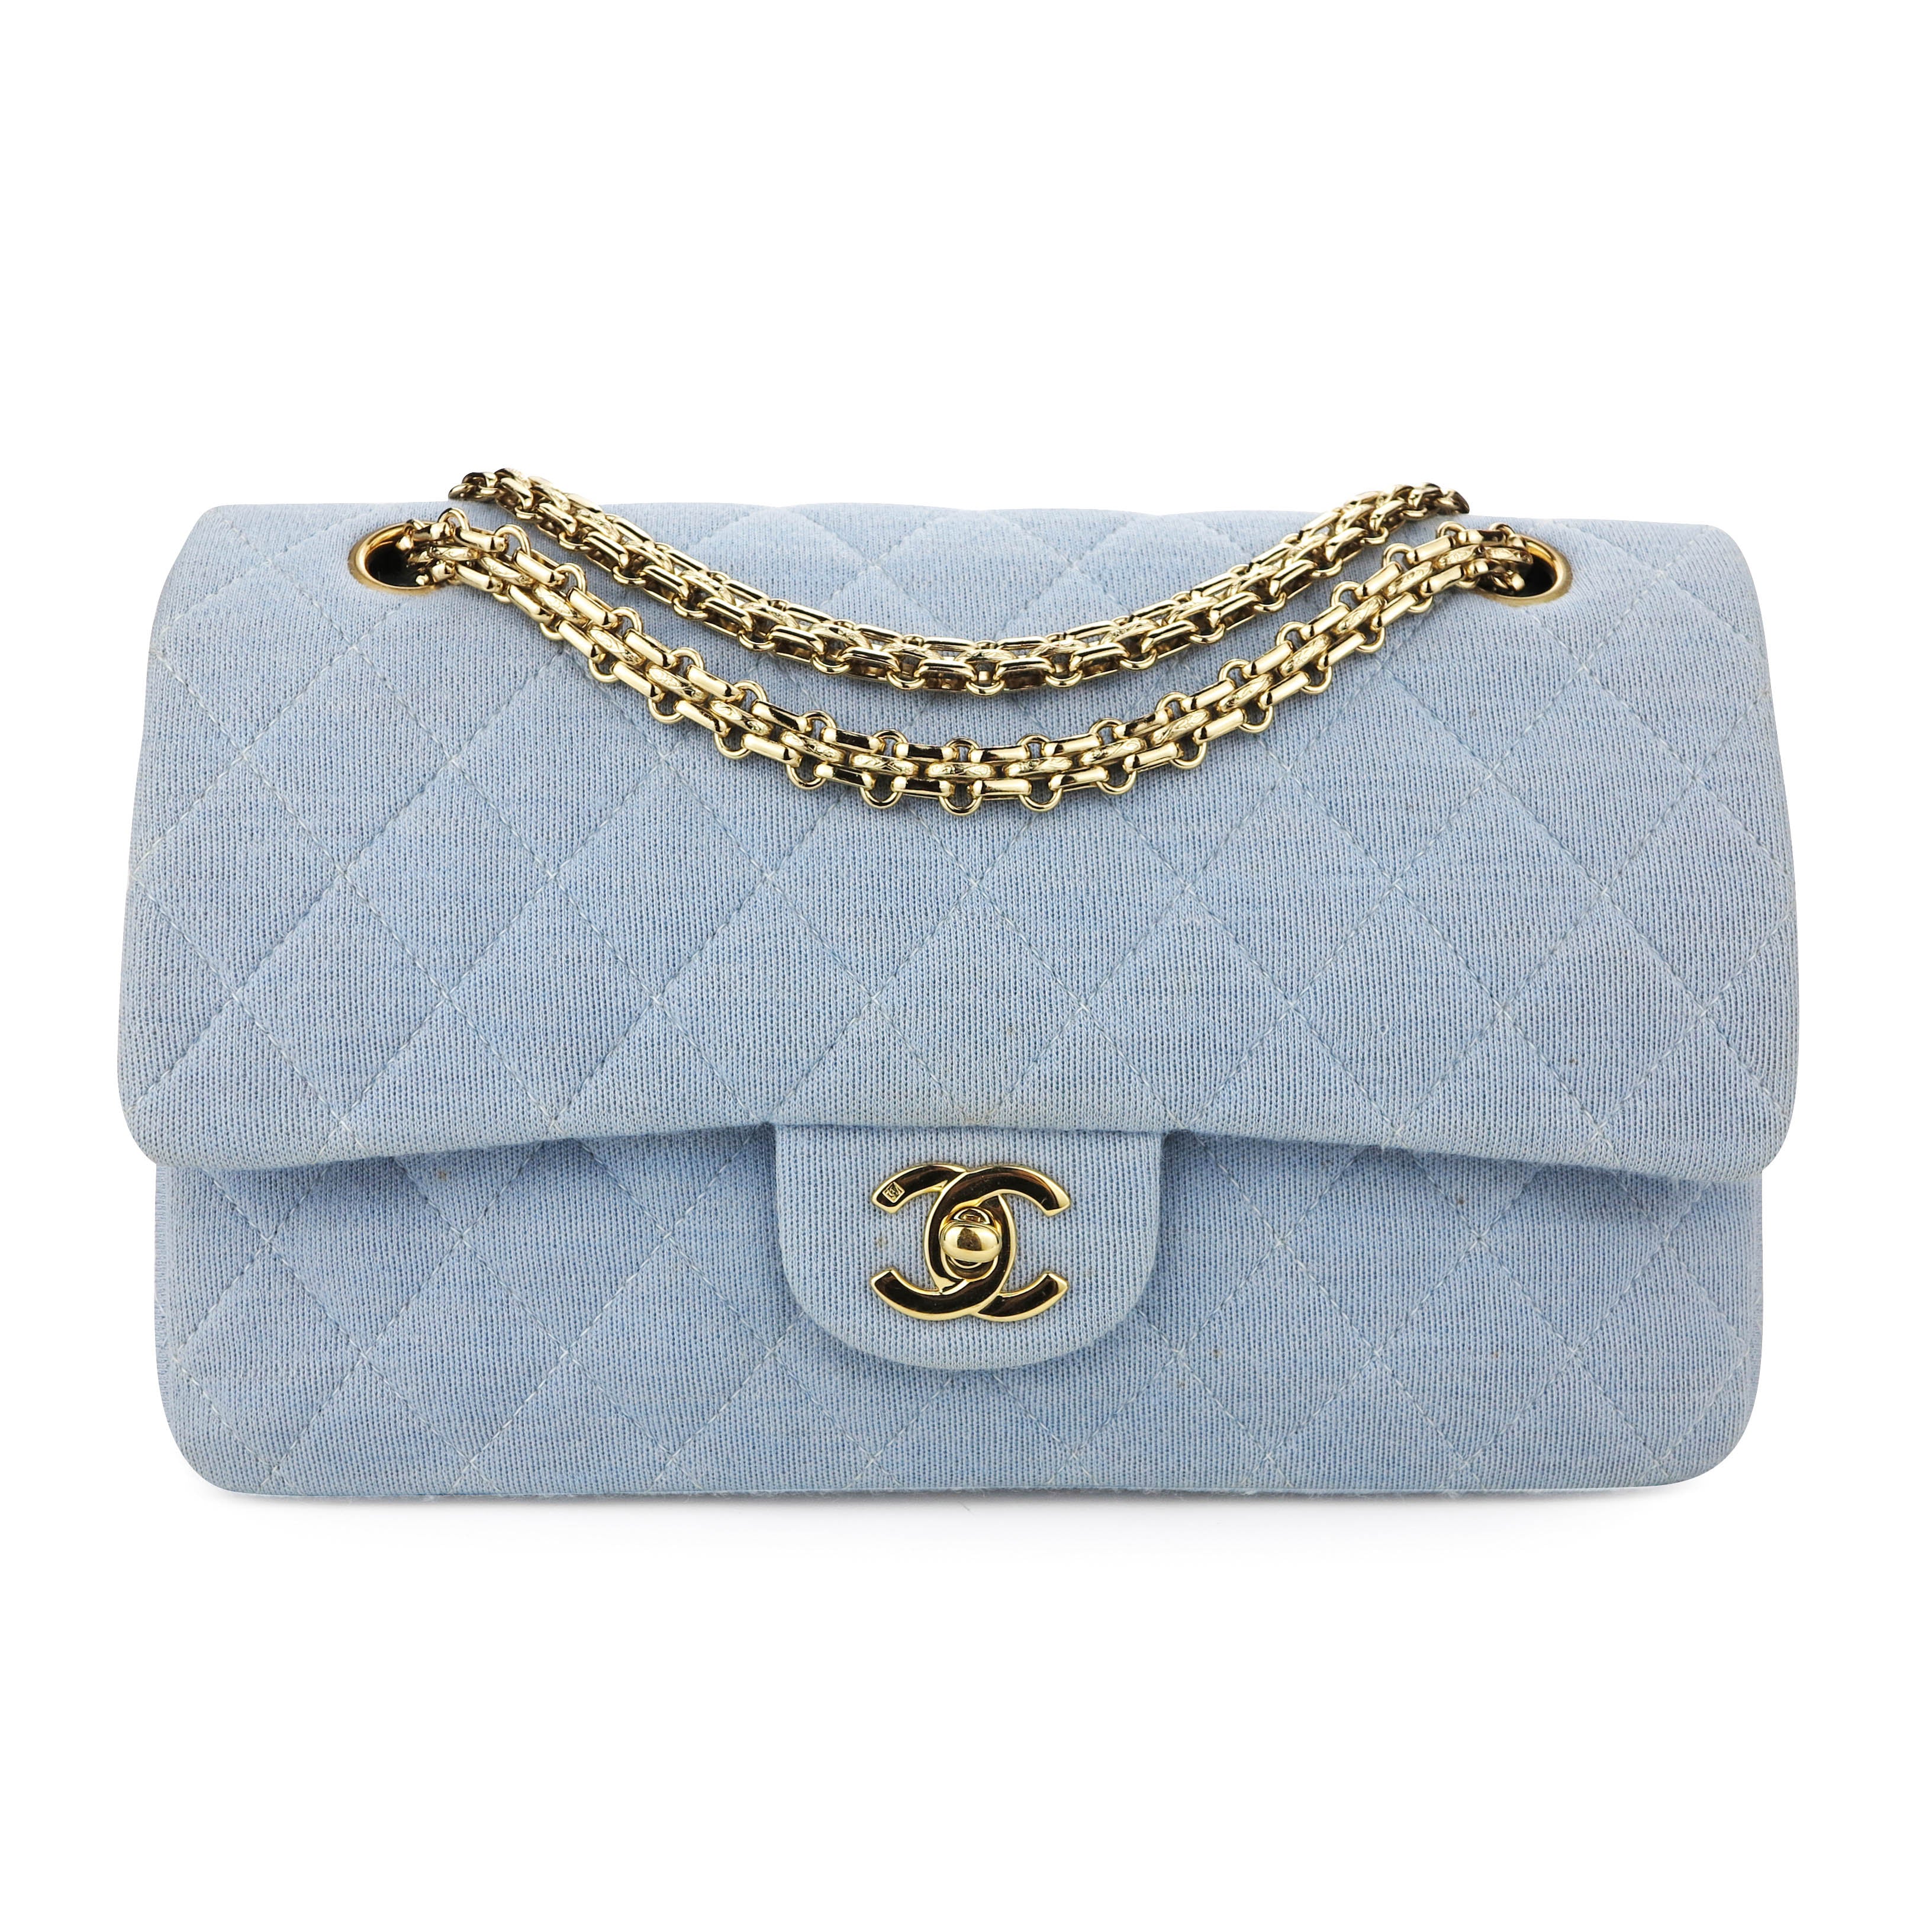 CHANEL Vintage Medium Classic Double Flap Bag in Light Blue